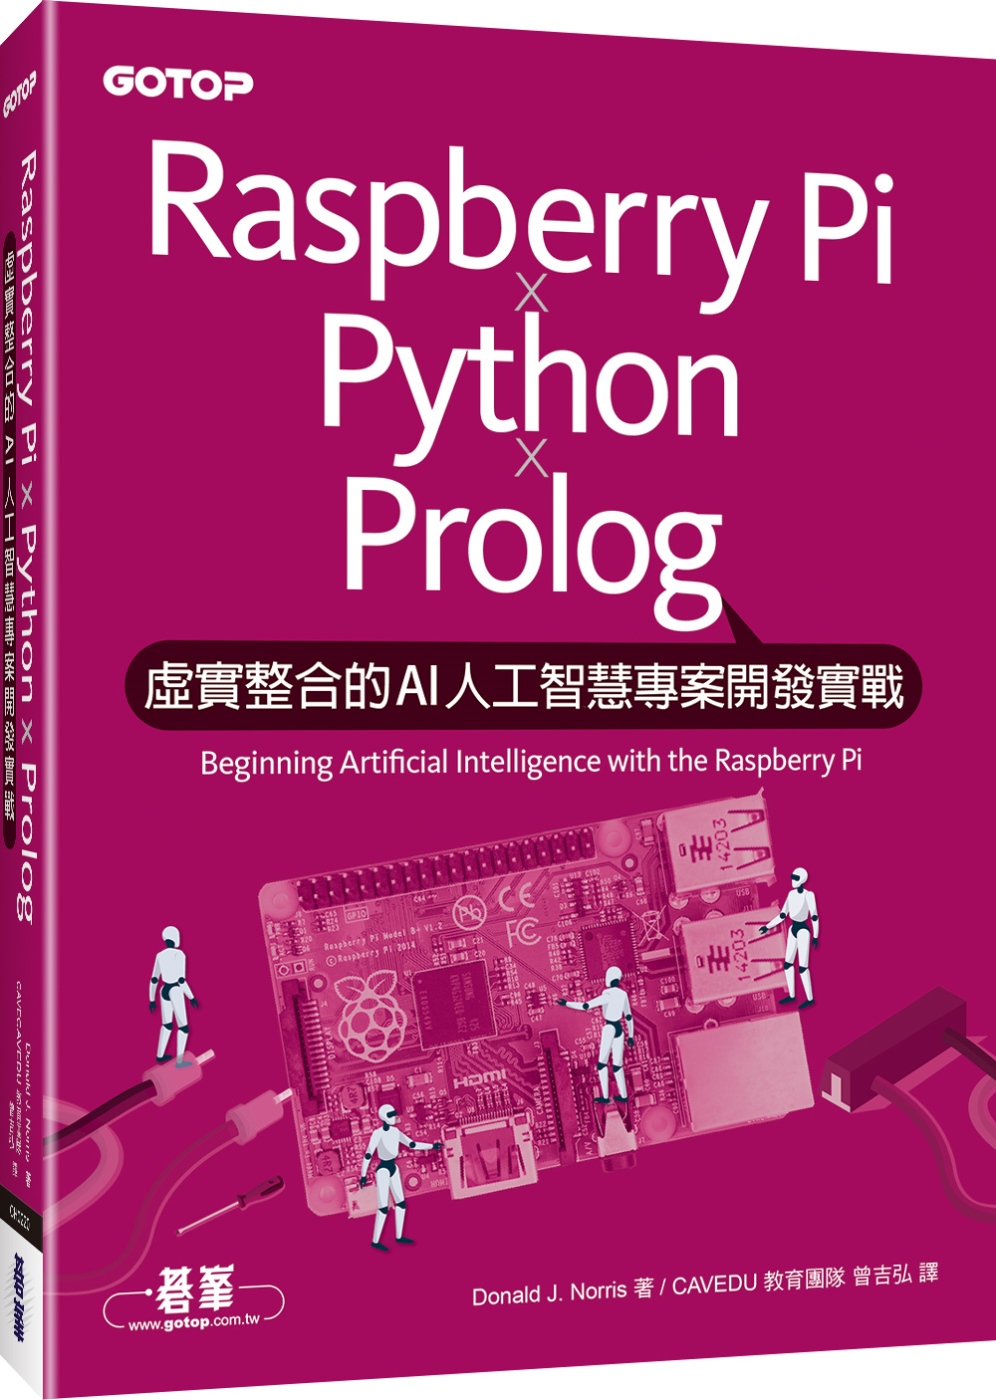 Raspberry Pi x Python x Prolog...